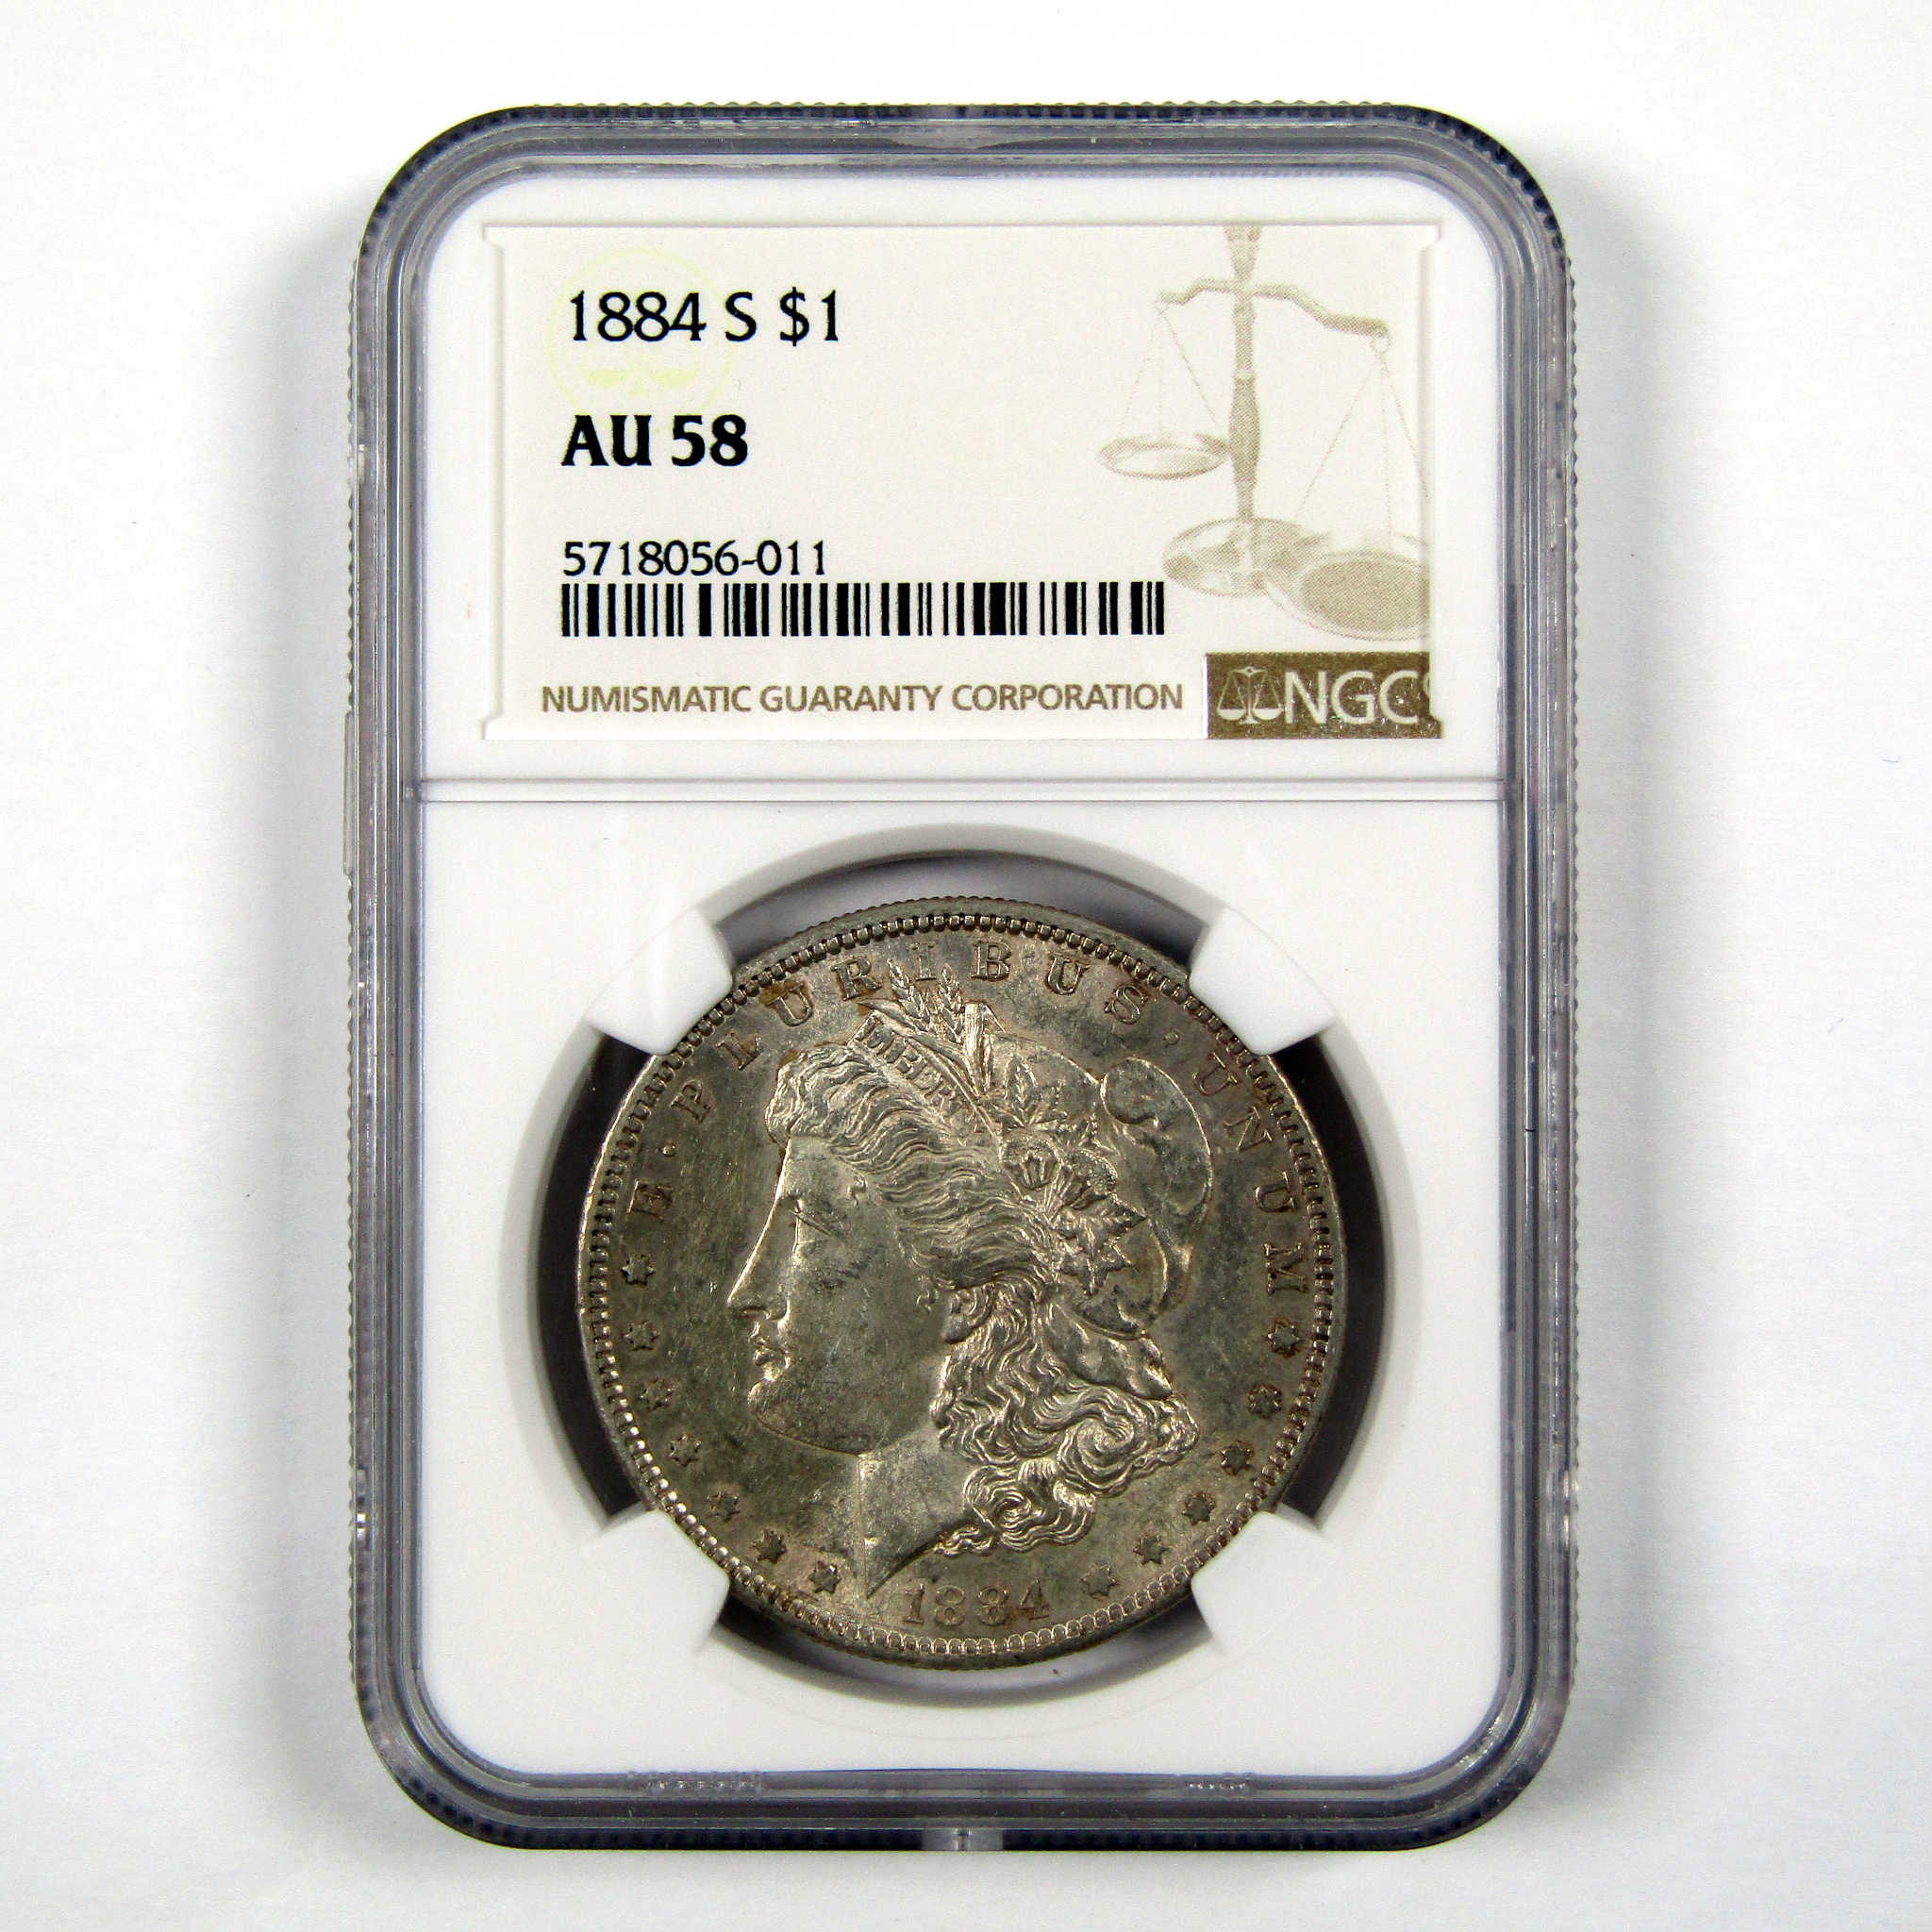 1884 S Morgan Dollar AU 58 NGC 90% Silver $1 Coin SKU:I9177 - Morgan coin - Morgan silver dollar - Morgan silver dollar for sale - Profile Coins &amp; Collectibles